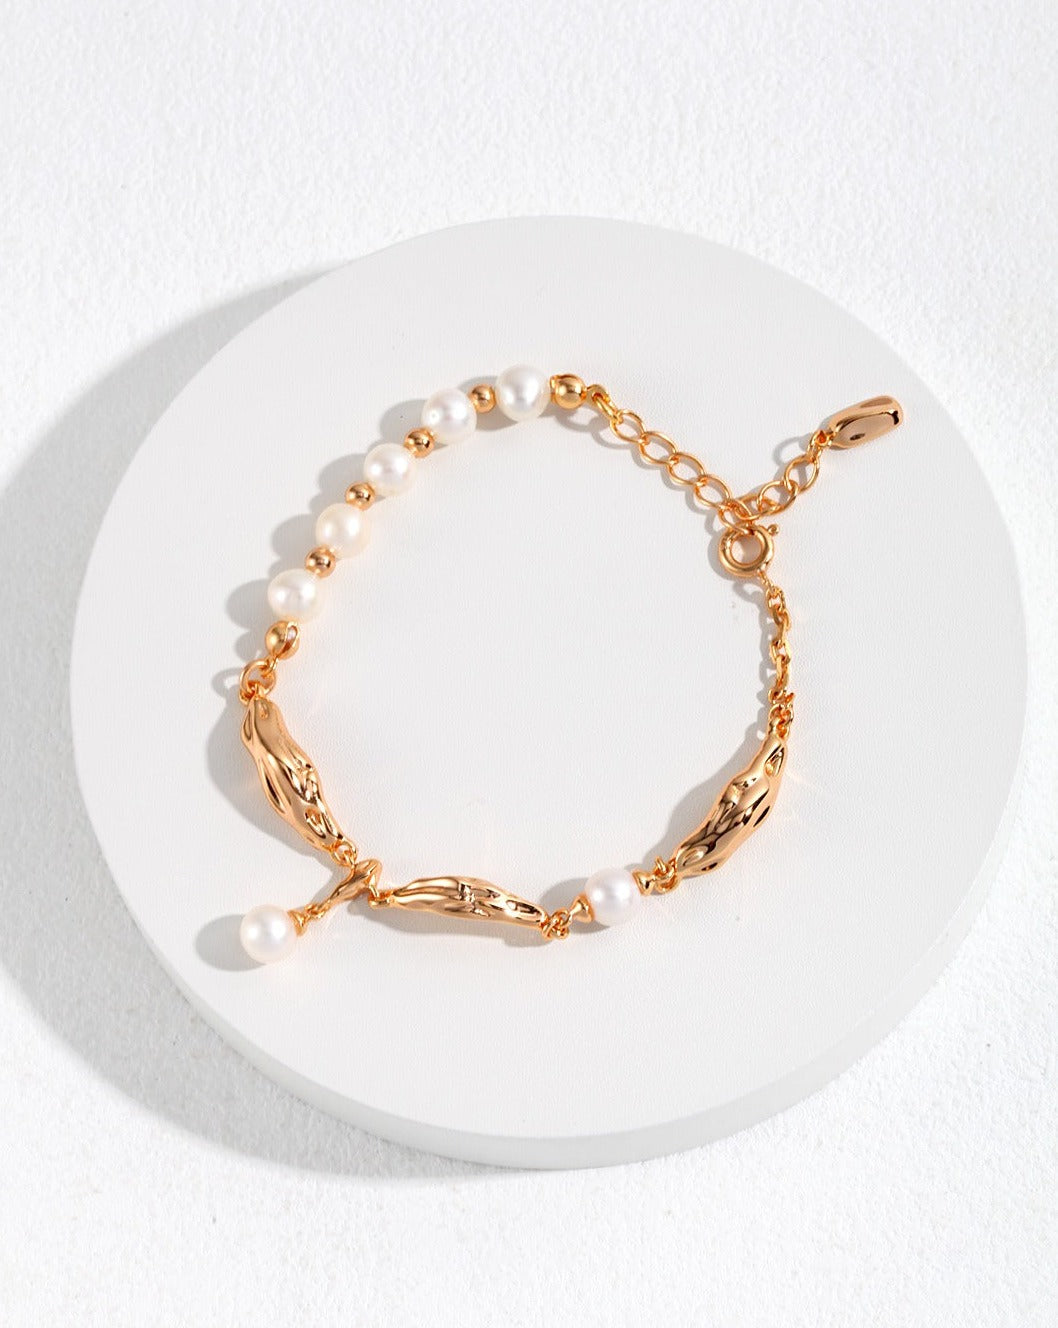 fashion-jewelry-minimalist-jewelry-design-jewelry-statement-necklace-pearl-earring-bracelet-rings-gold-coated-silver-bijoux